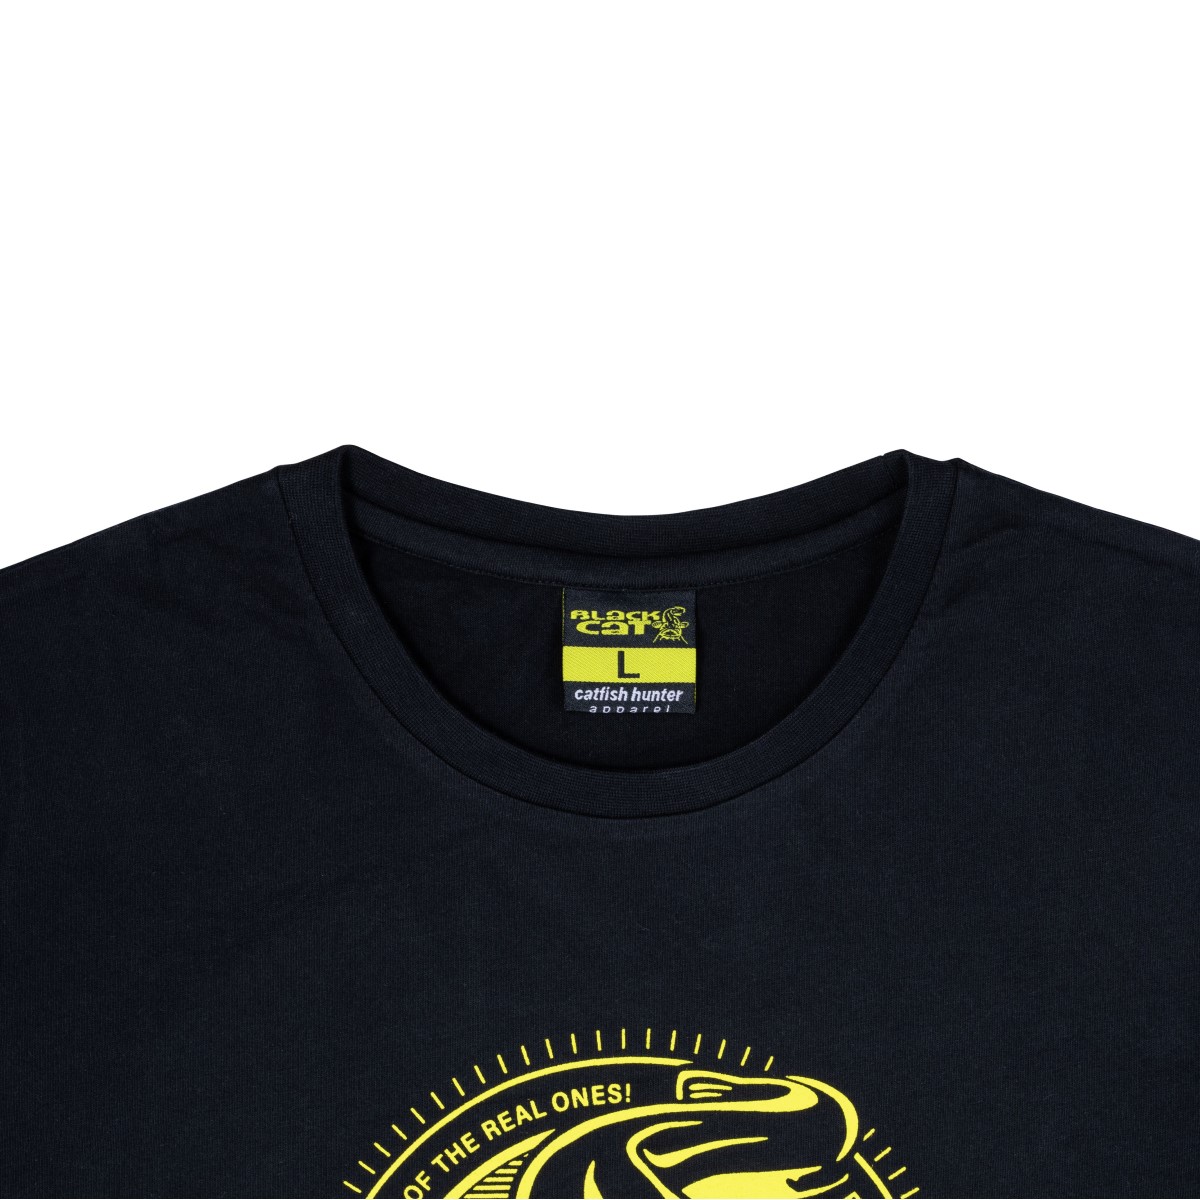 Тениска Black Cat Established Collection T-Shirt Black